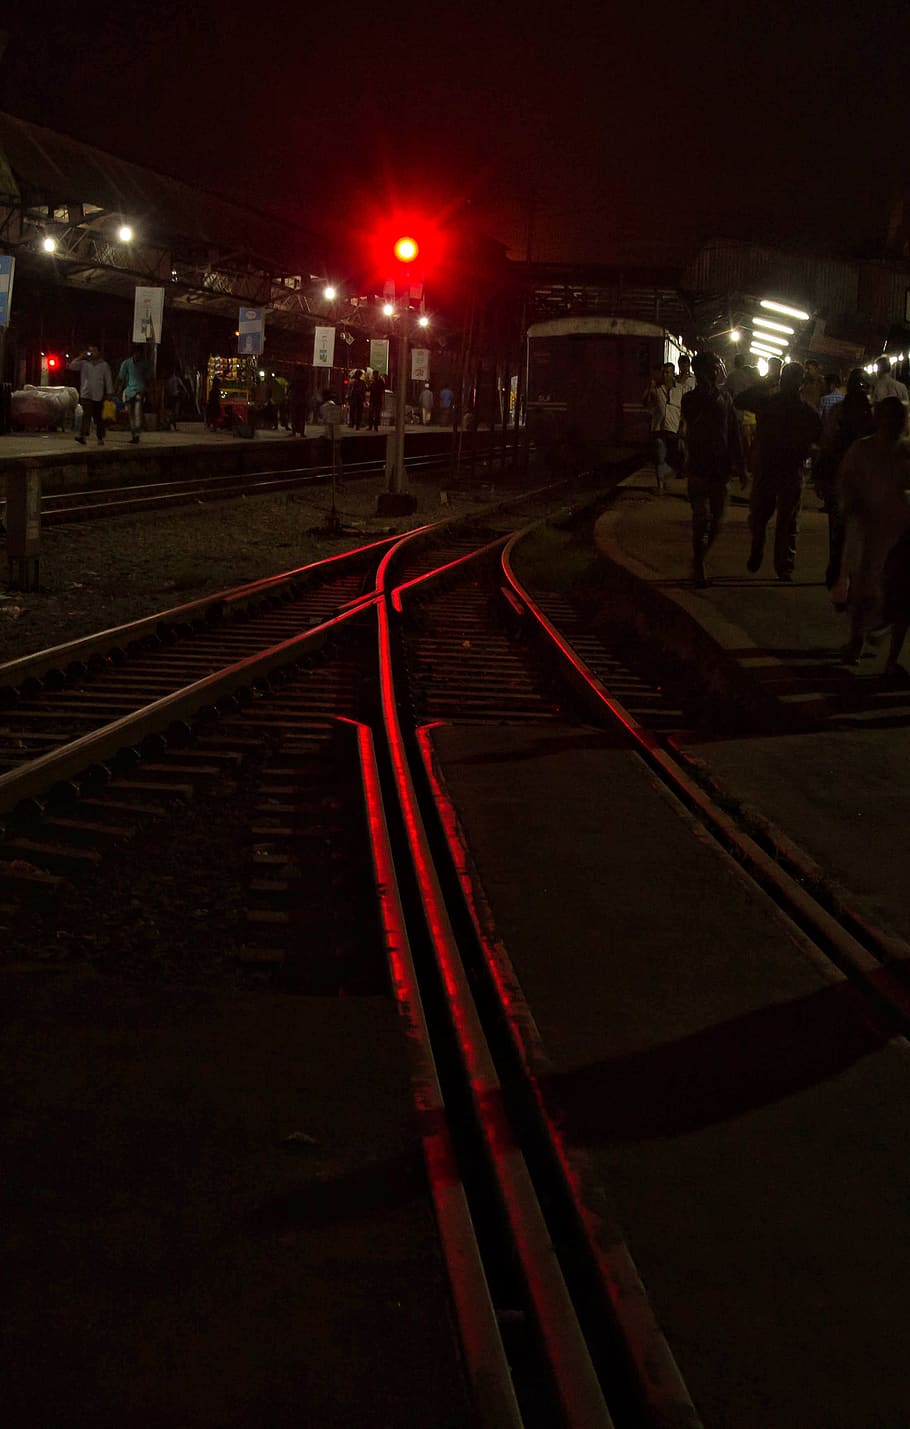 train, tracks, signal, red, illuminated, night, transportation